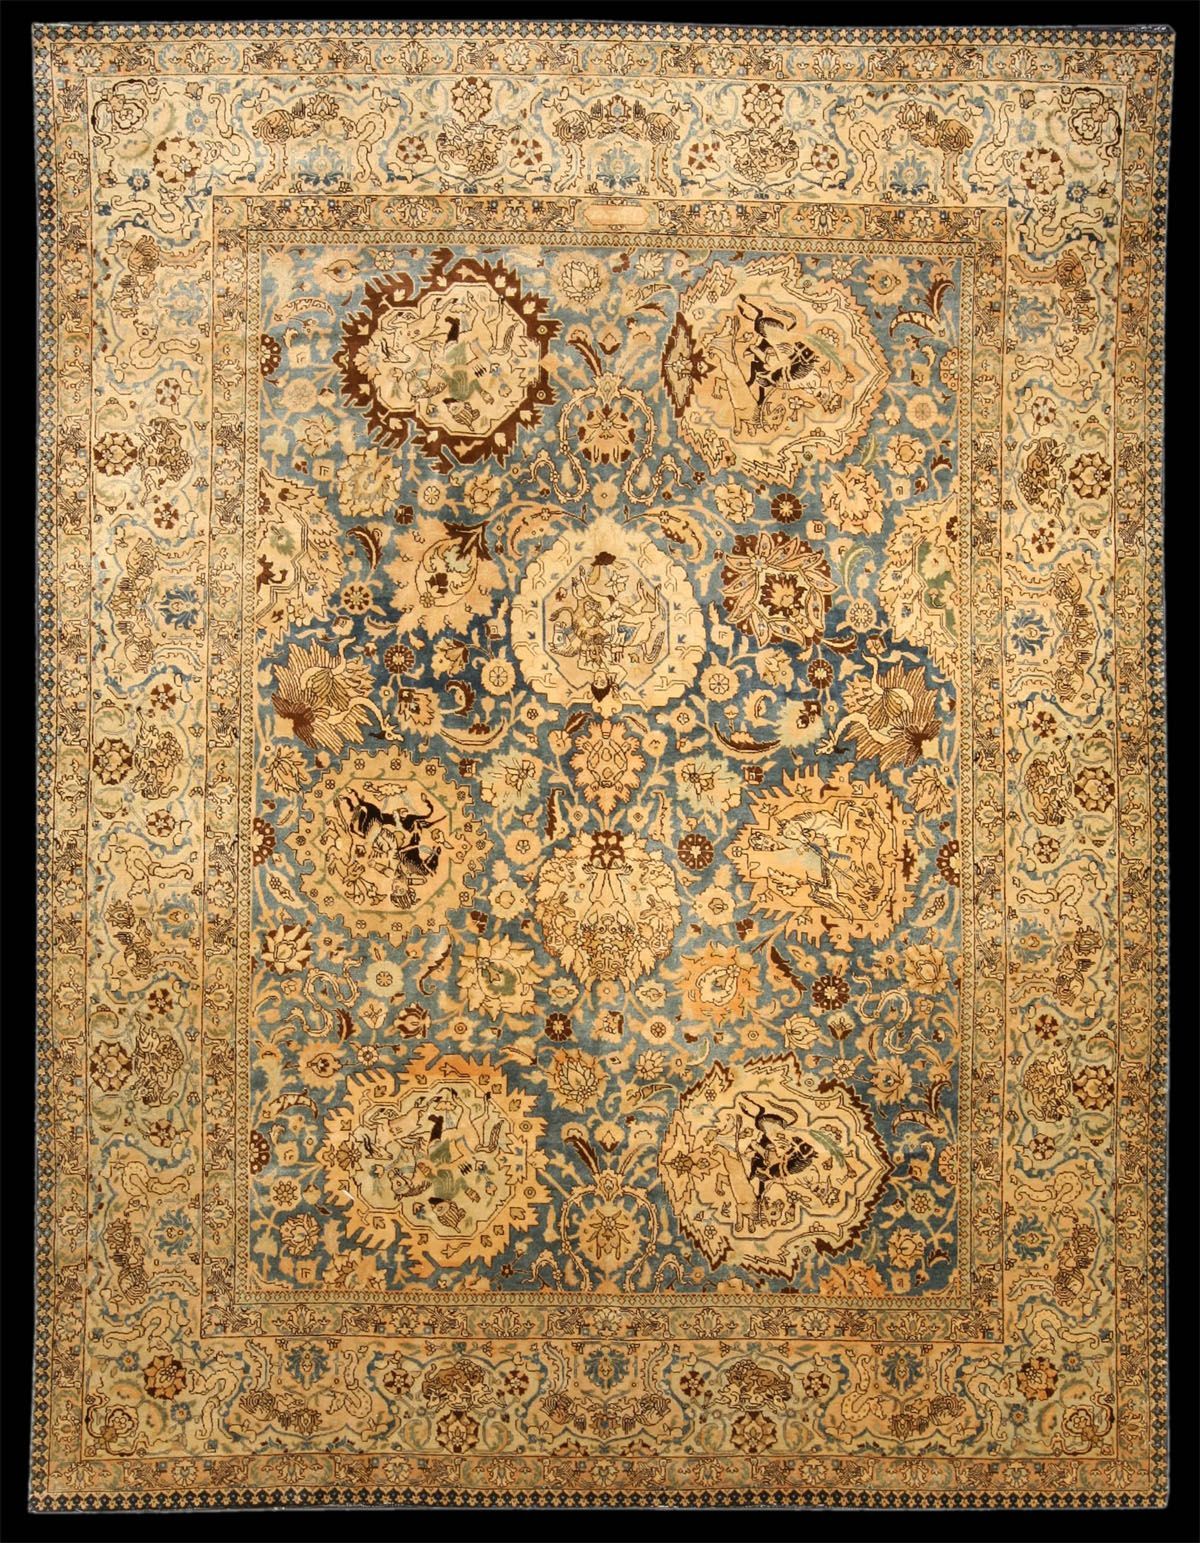 Antique Wallpaper Free Download. Black Wallpaper For Desktop. Persian tabriz rug, Antique rugs persian carpet, Antique rugs